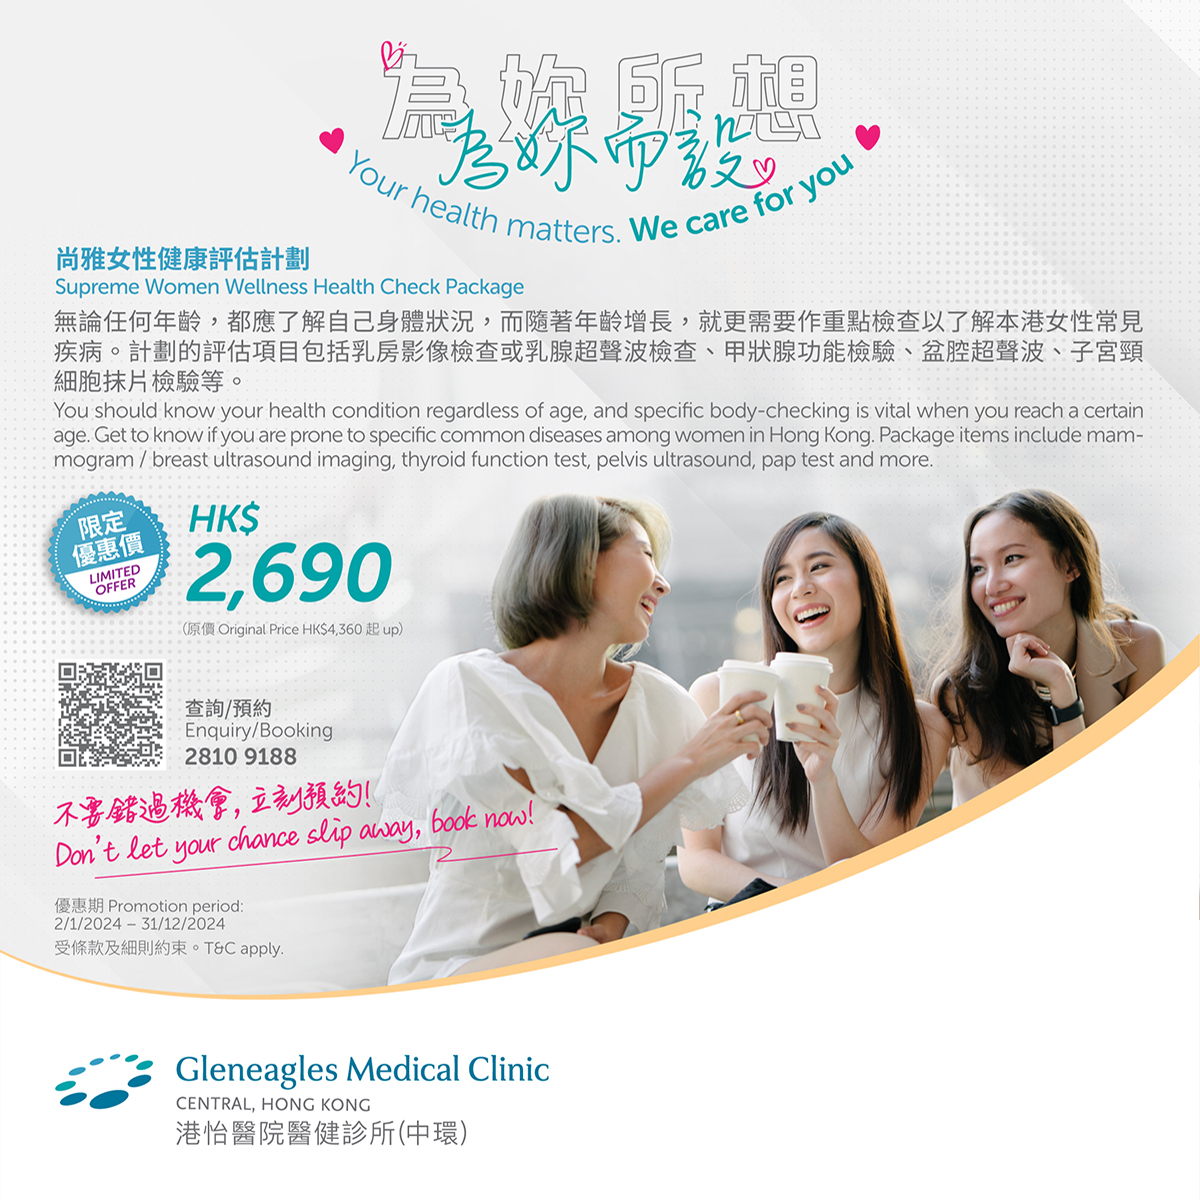 GMC-Supreme-Women-Wellness-Health-Check-FB-01.jpg#asset:272399:url